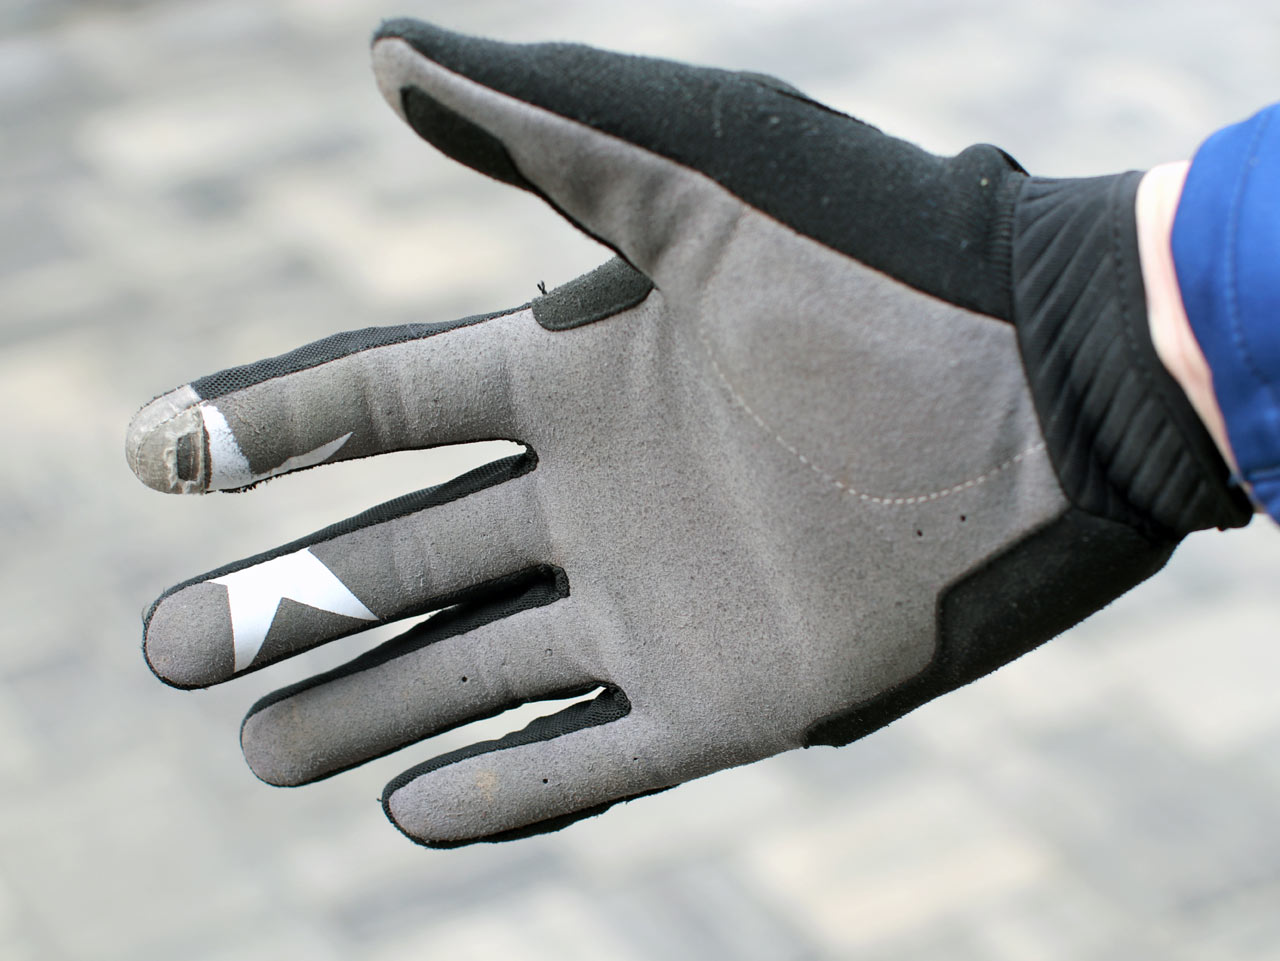 Evoc Freeride Touch Glove